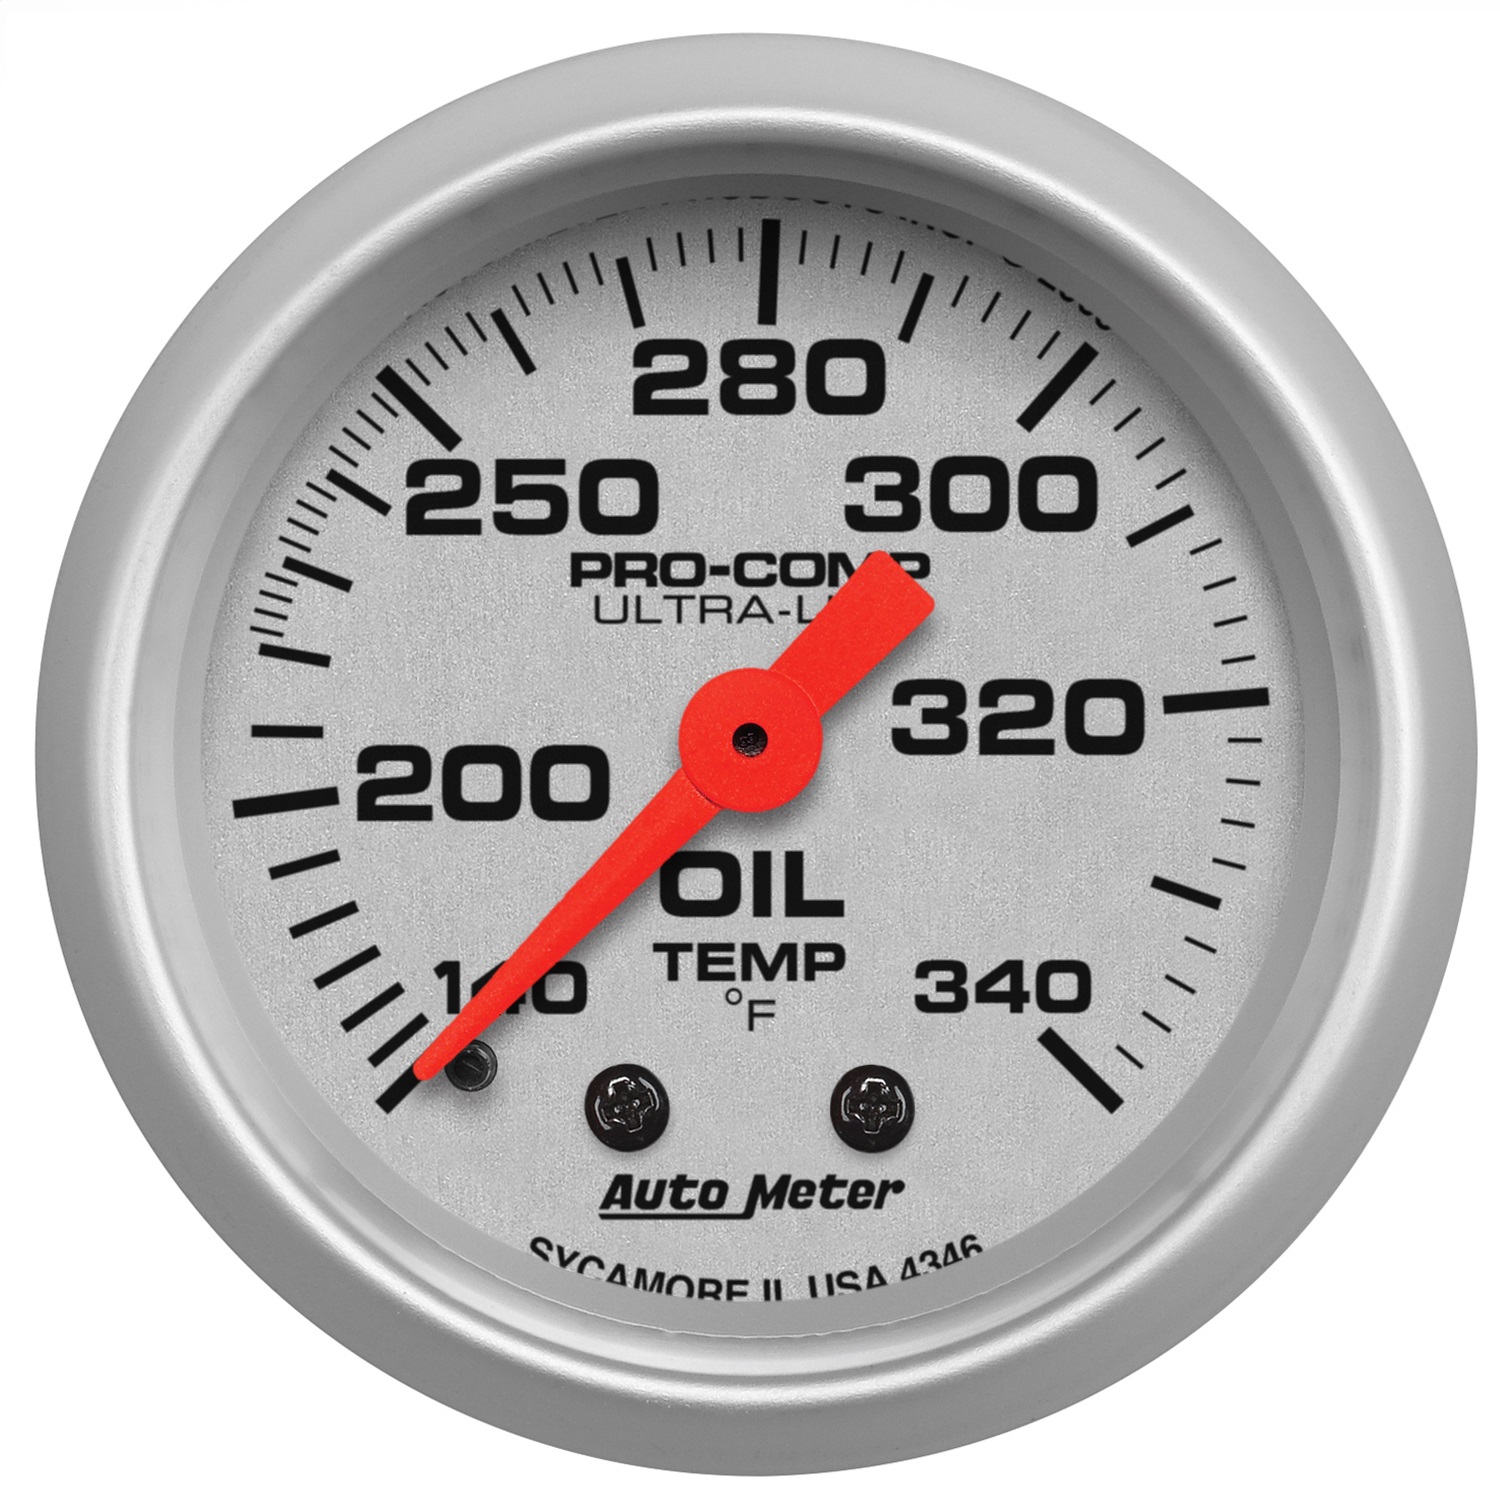 Auto Meter Auto Meter 4346 Ultra-Lite; Mechanical Oil Tank Temperature Gauge